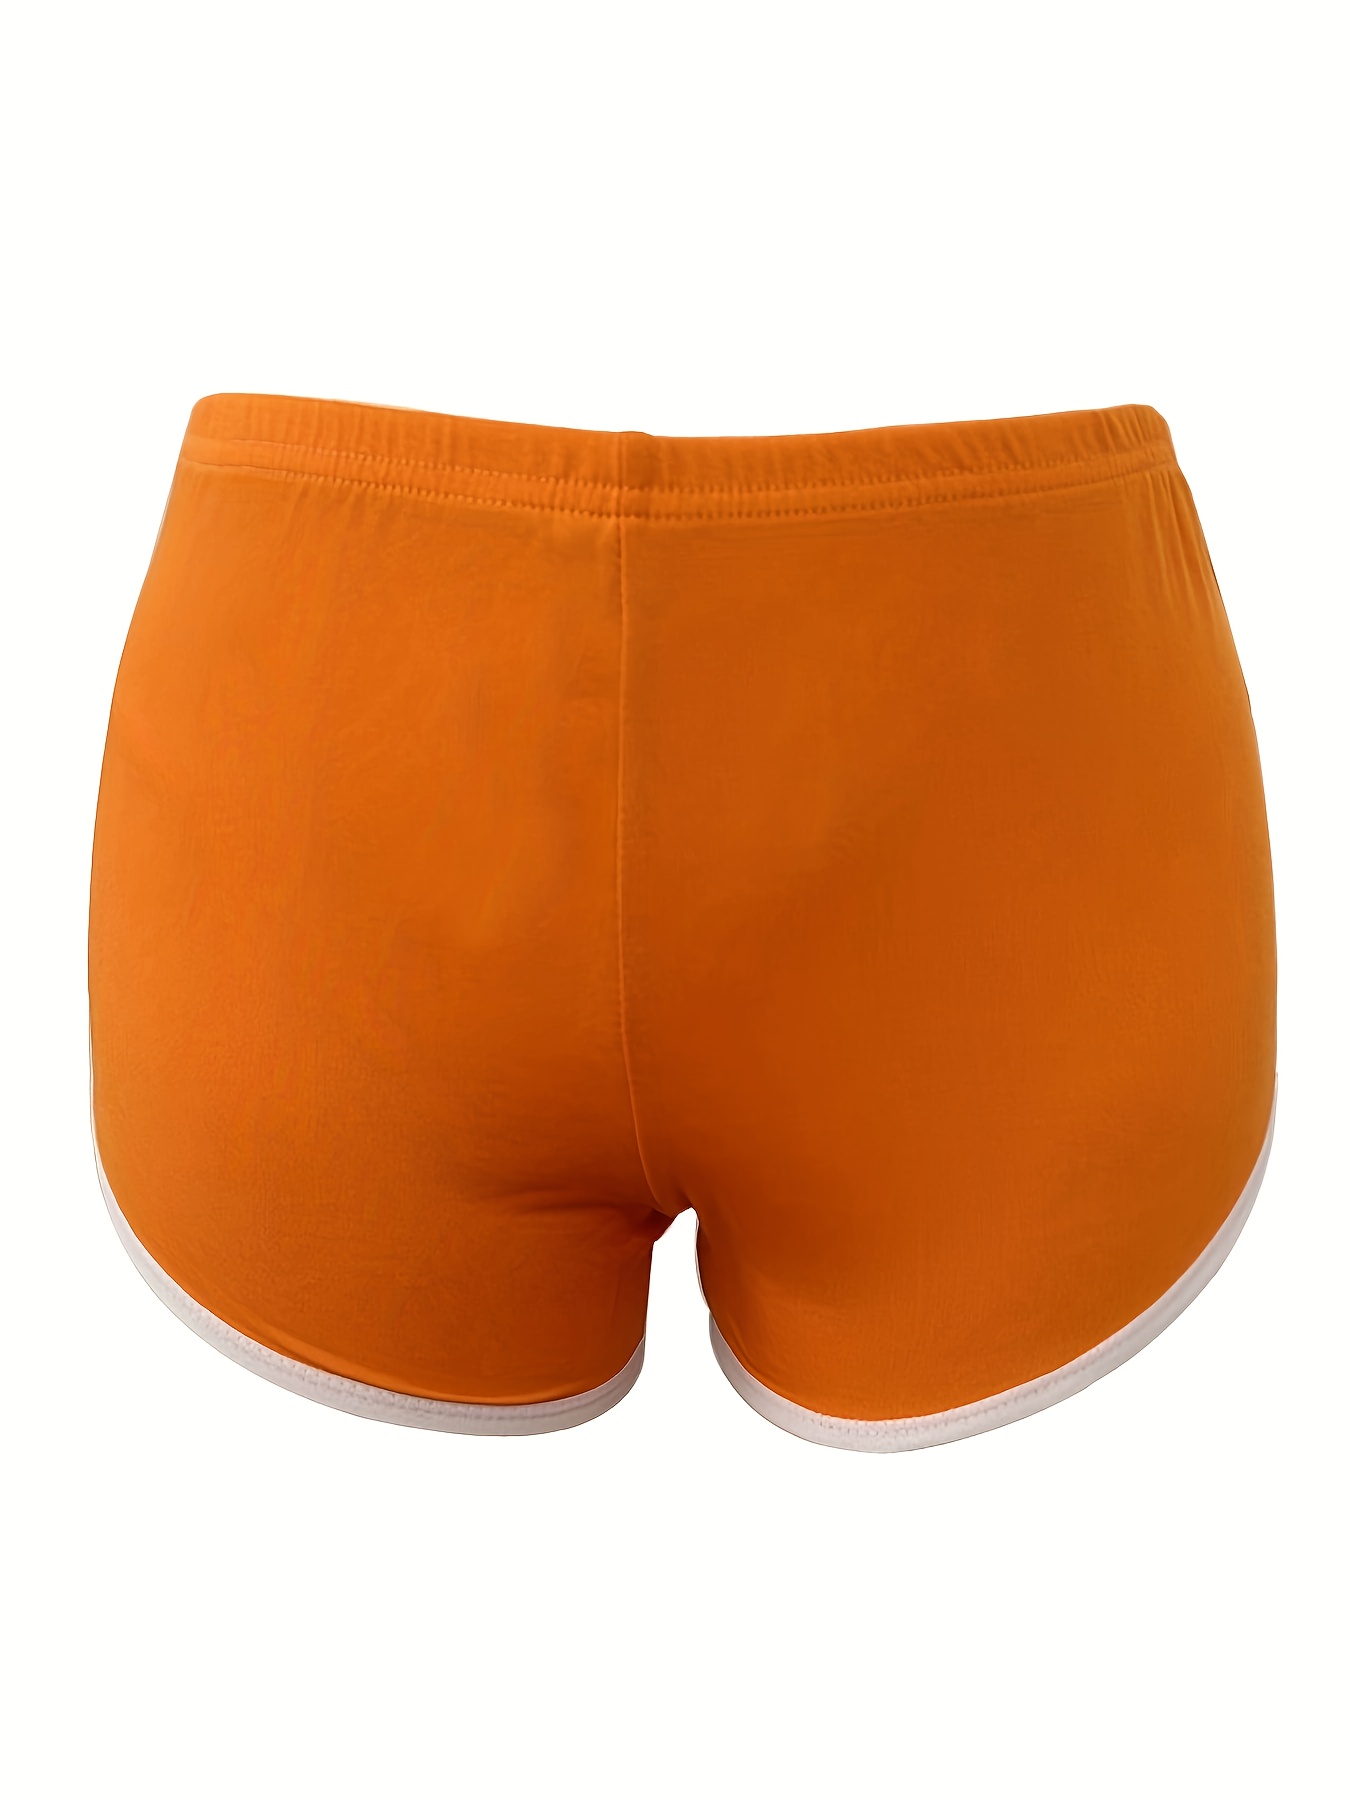  ZQYLAN Fruit Lemon Women's Running Shorts Orange Athletic  Sporty Workout Gym Shorts with Pockets, Small : Clothing, Shoes & Jewelry